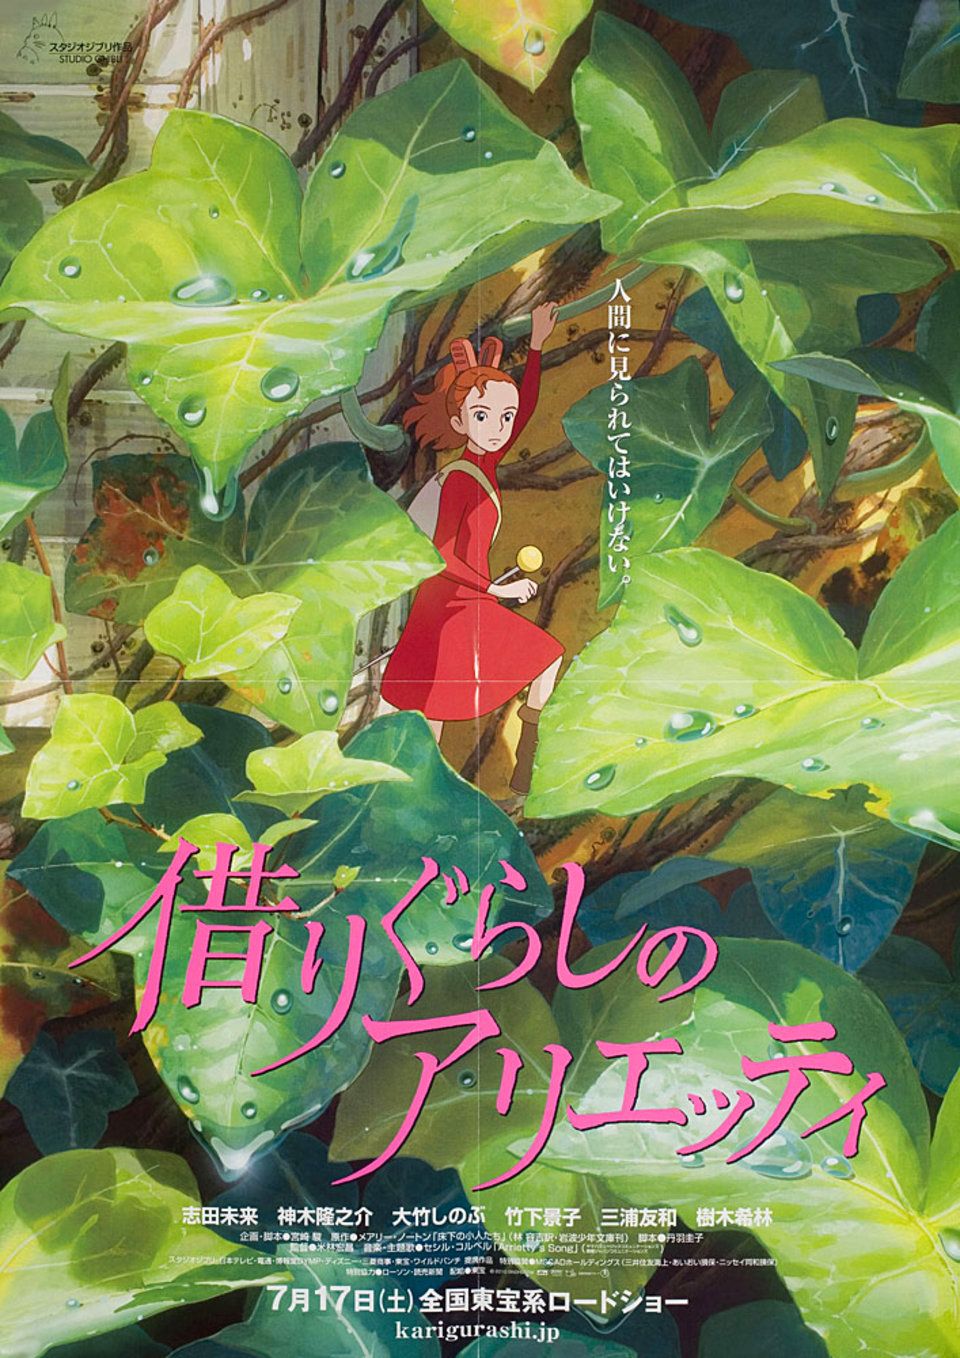 Poster Arrietty